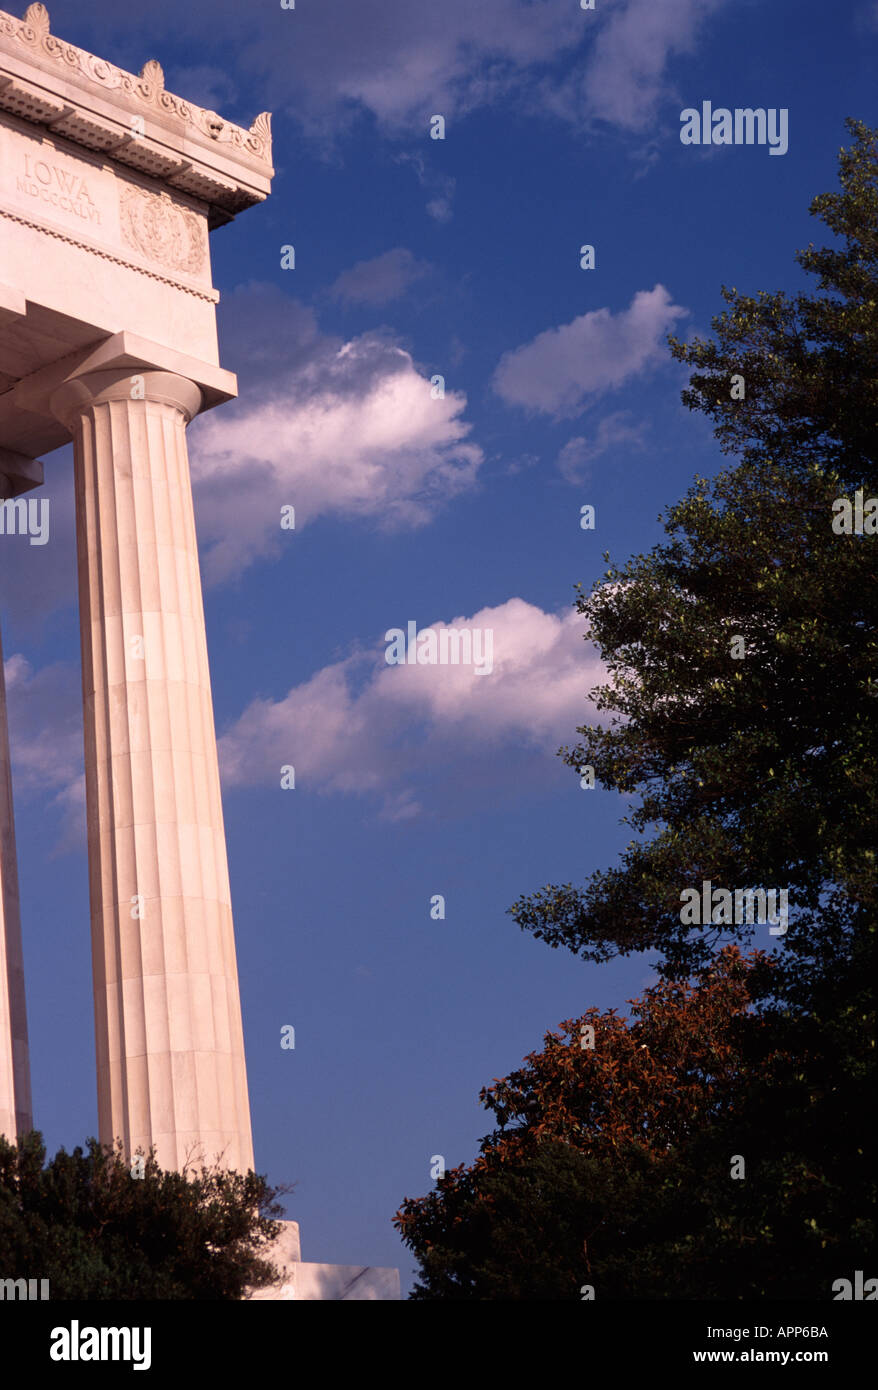 Lincoln Memorial in Washington D.C. Stock Photo